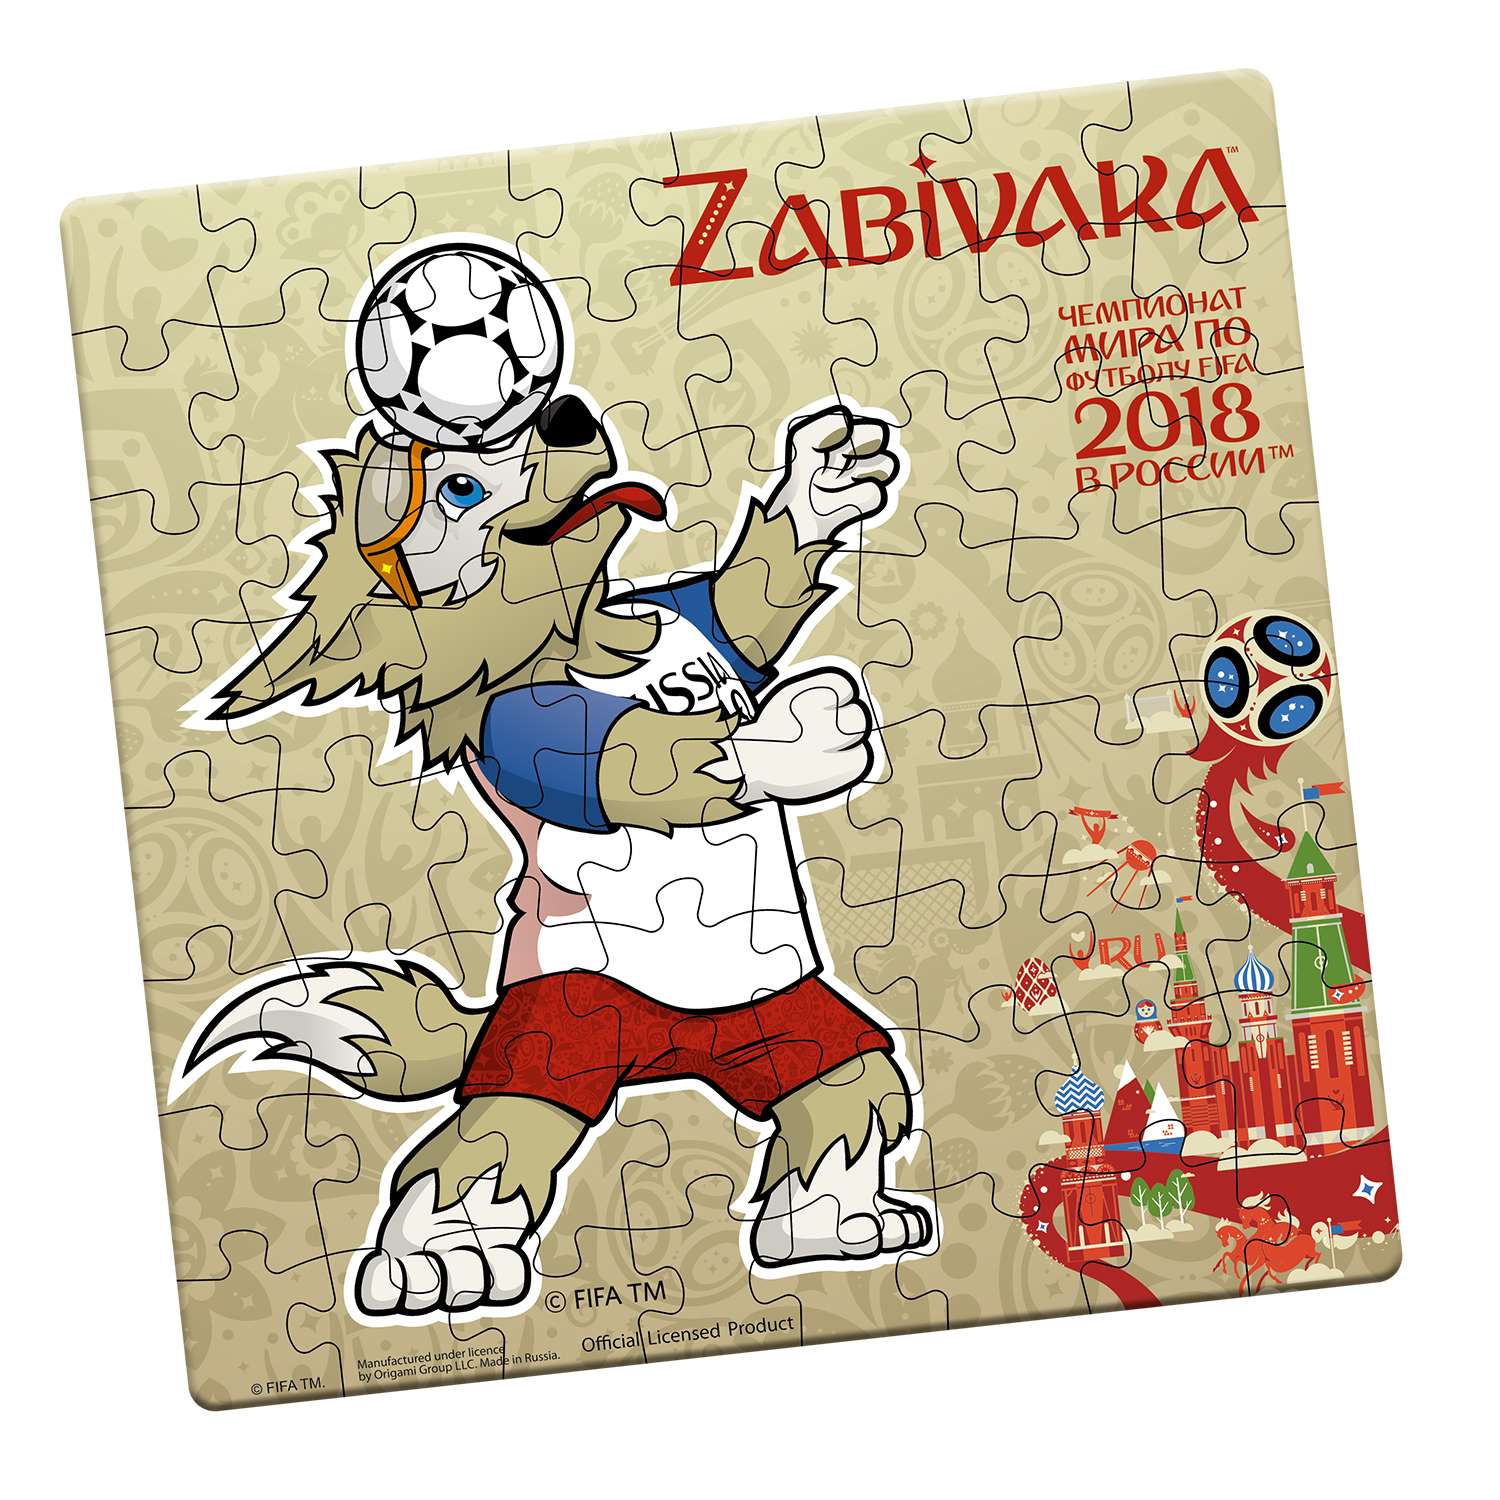 Пазл 2018 FIFA World Cup Russia TM Забивака (03793) 64 элемента в ассортименте - фото 6